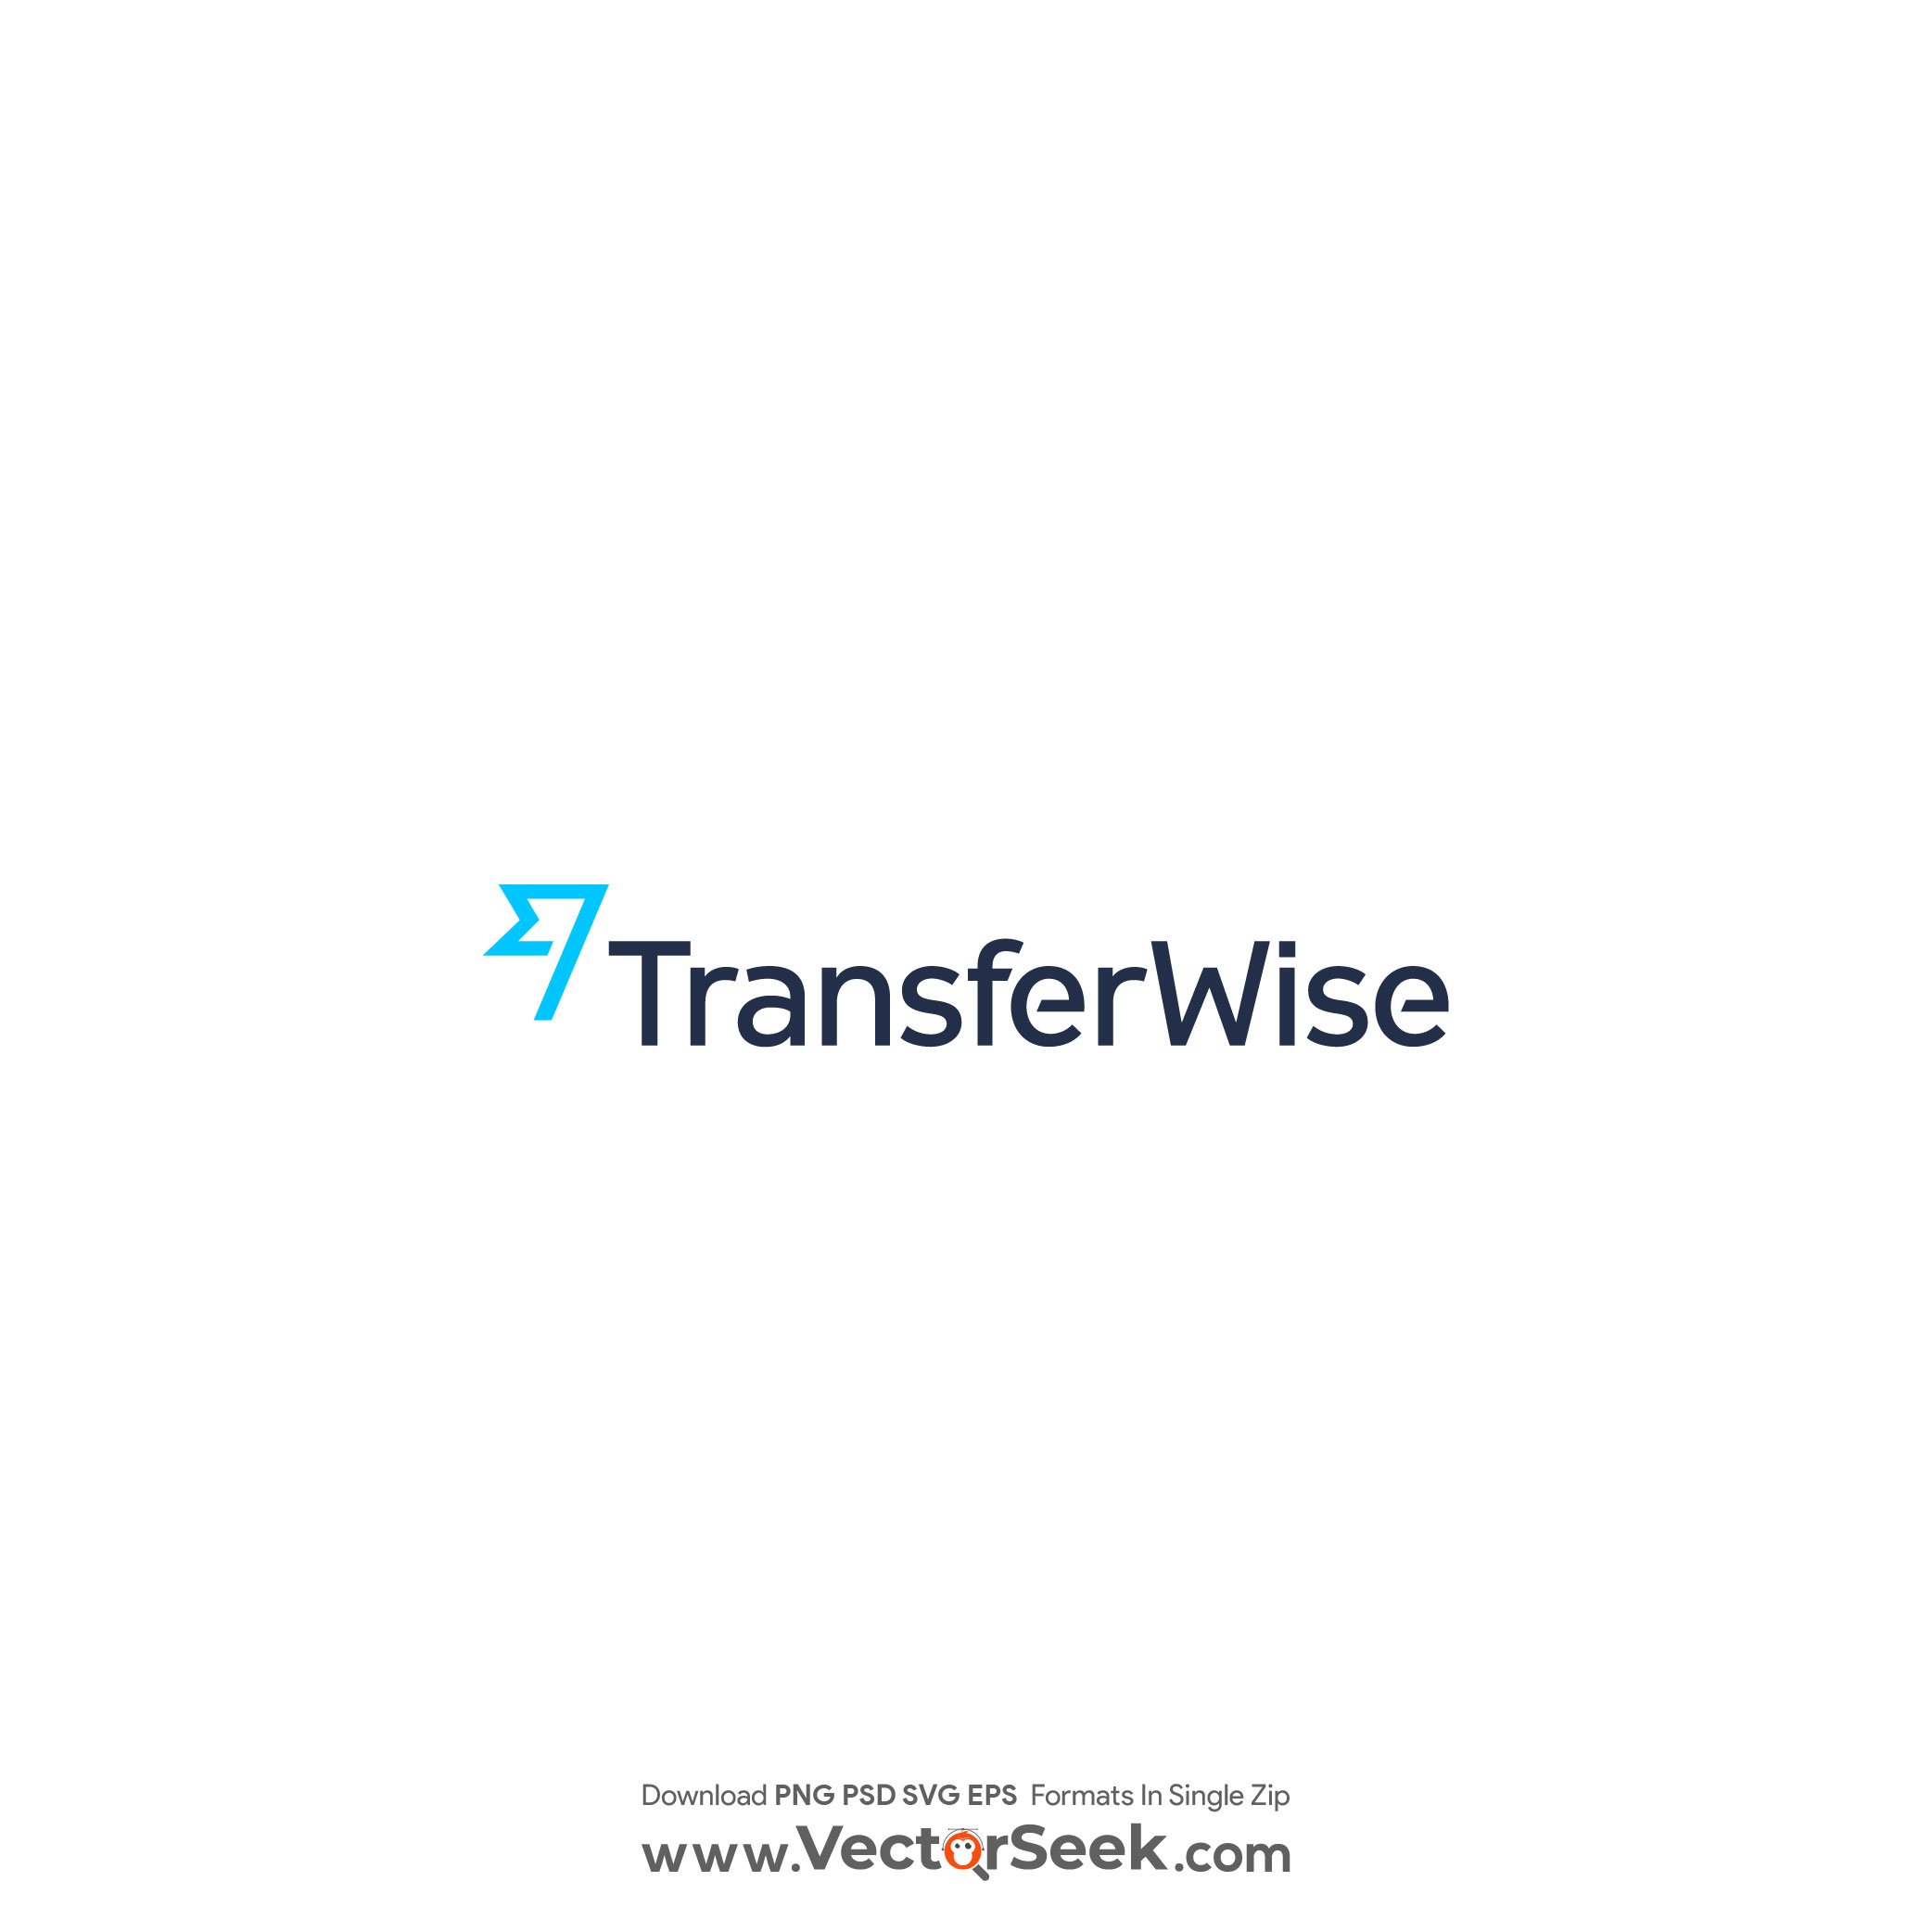 TransferWise Logo Vector